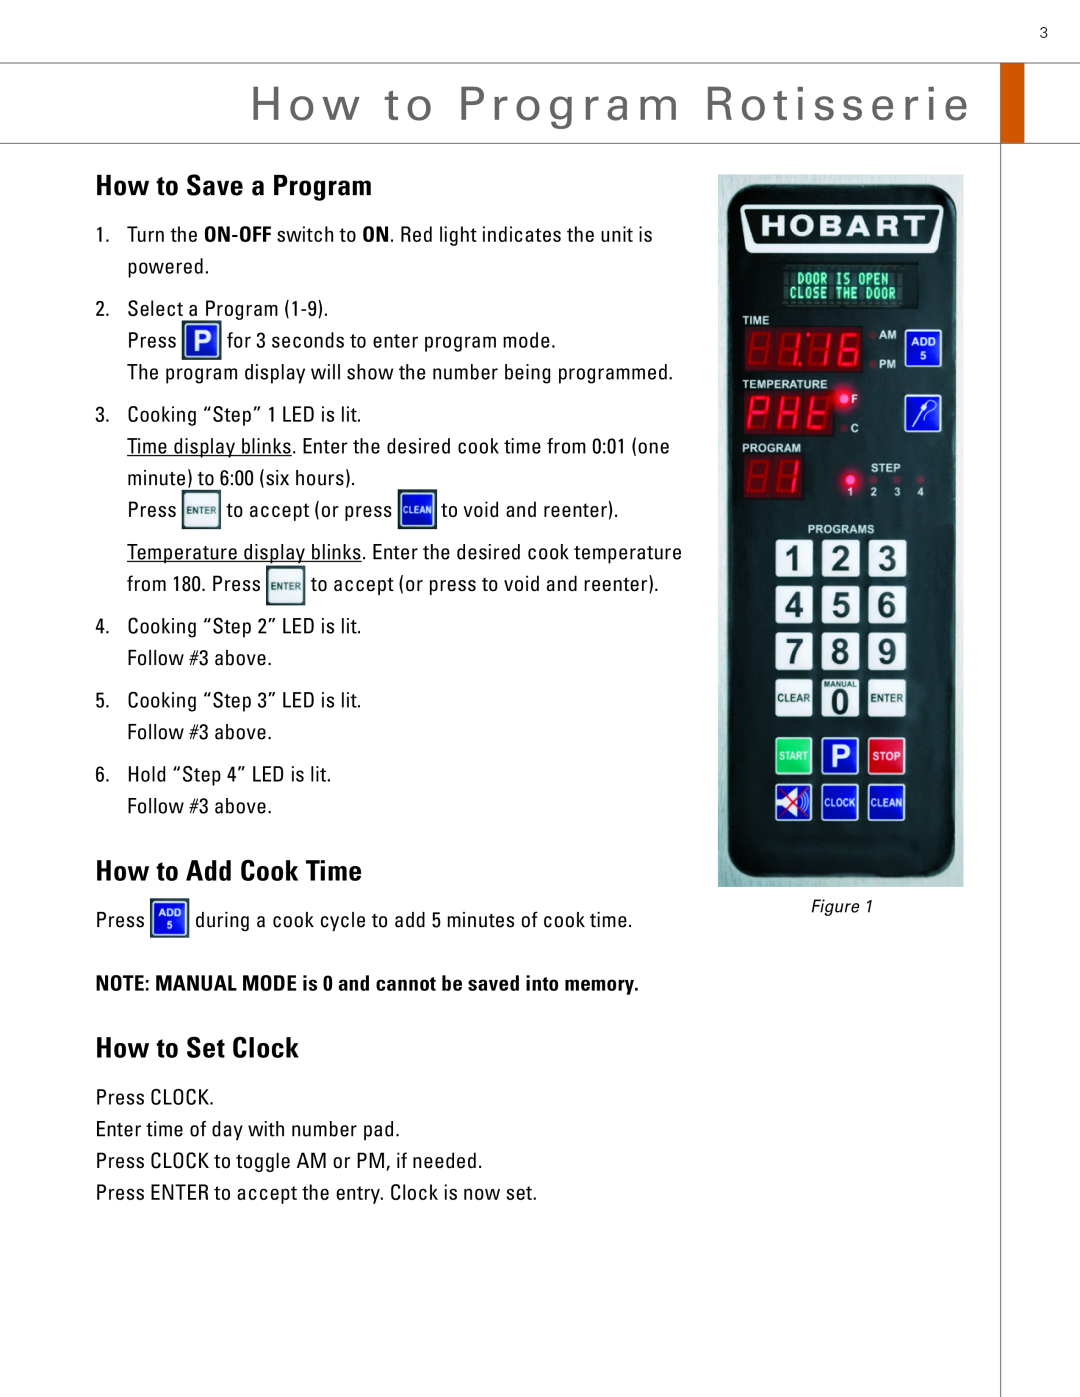 Hobart KA7E manual How to Program Rotisserie, How to Save a Program, How to Add Cook Time, How to Set Clock 